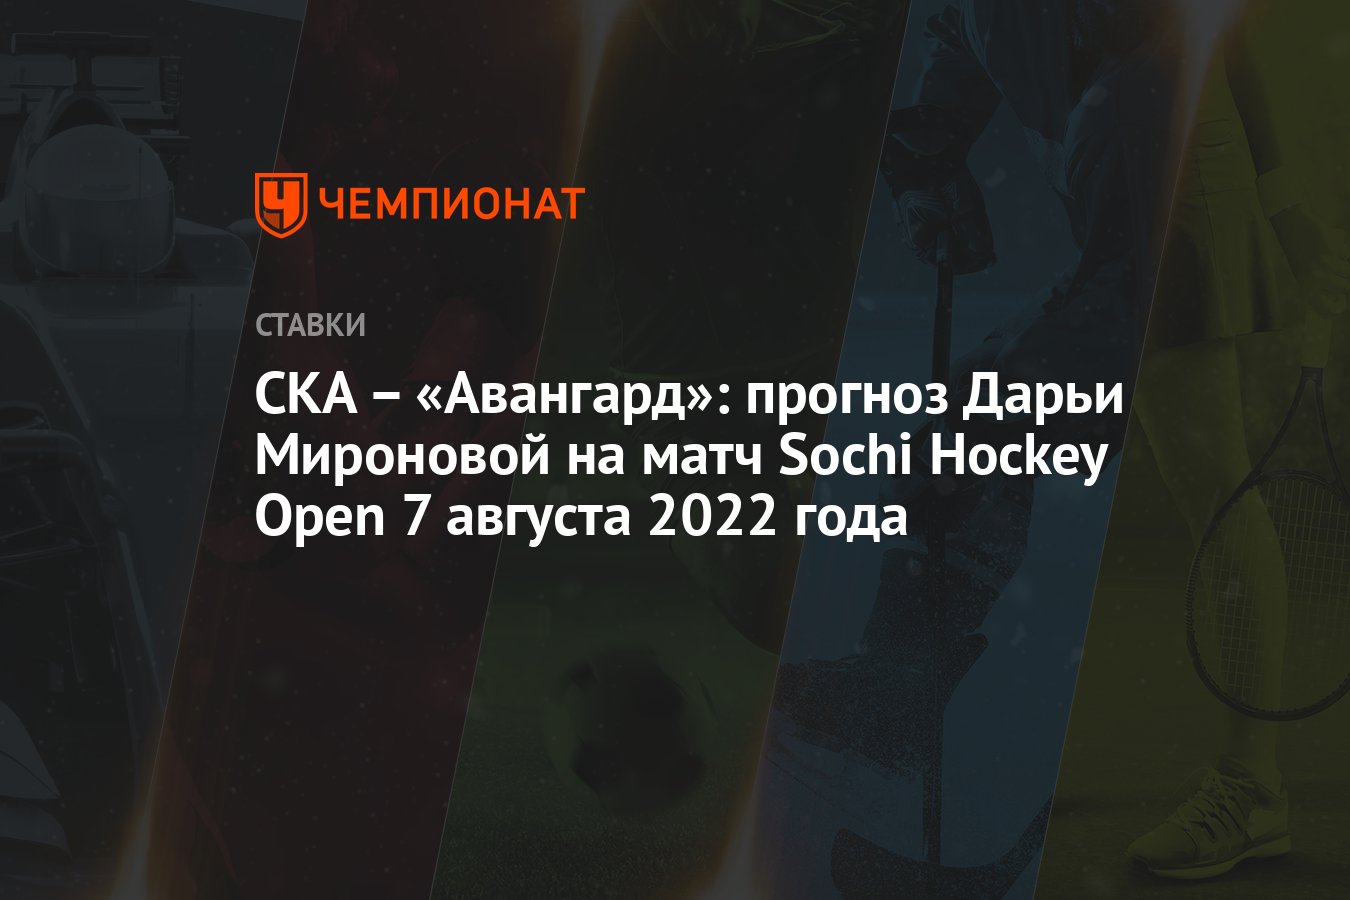 ska-–-avangard:-daria-mironova'nin-7-agustos-2022'deki-sochi-hokey-acik-maci-icin-tahmini